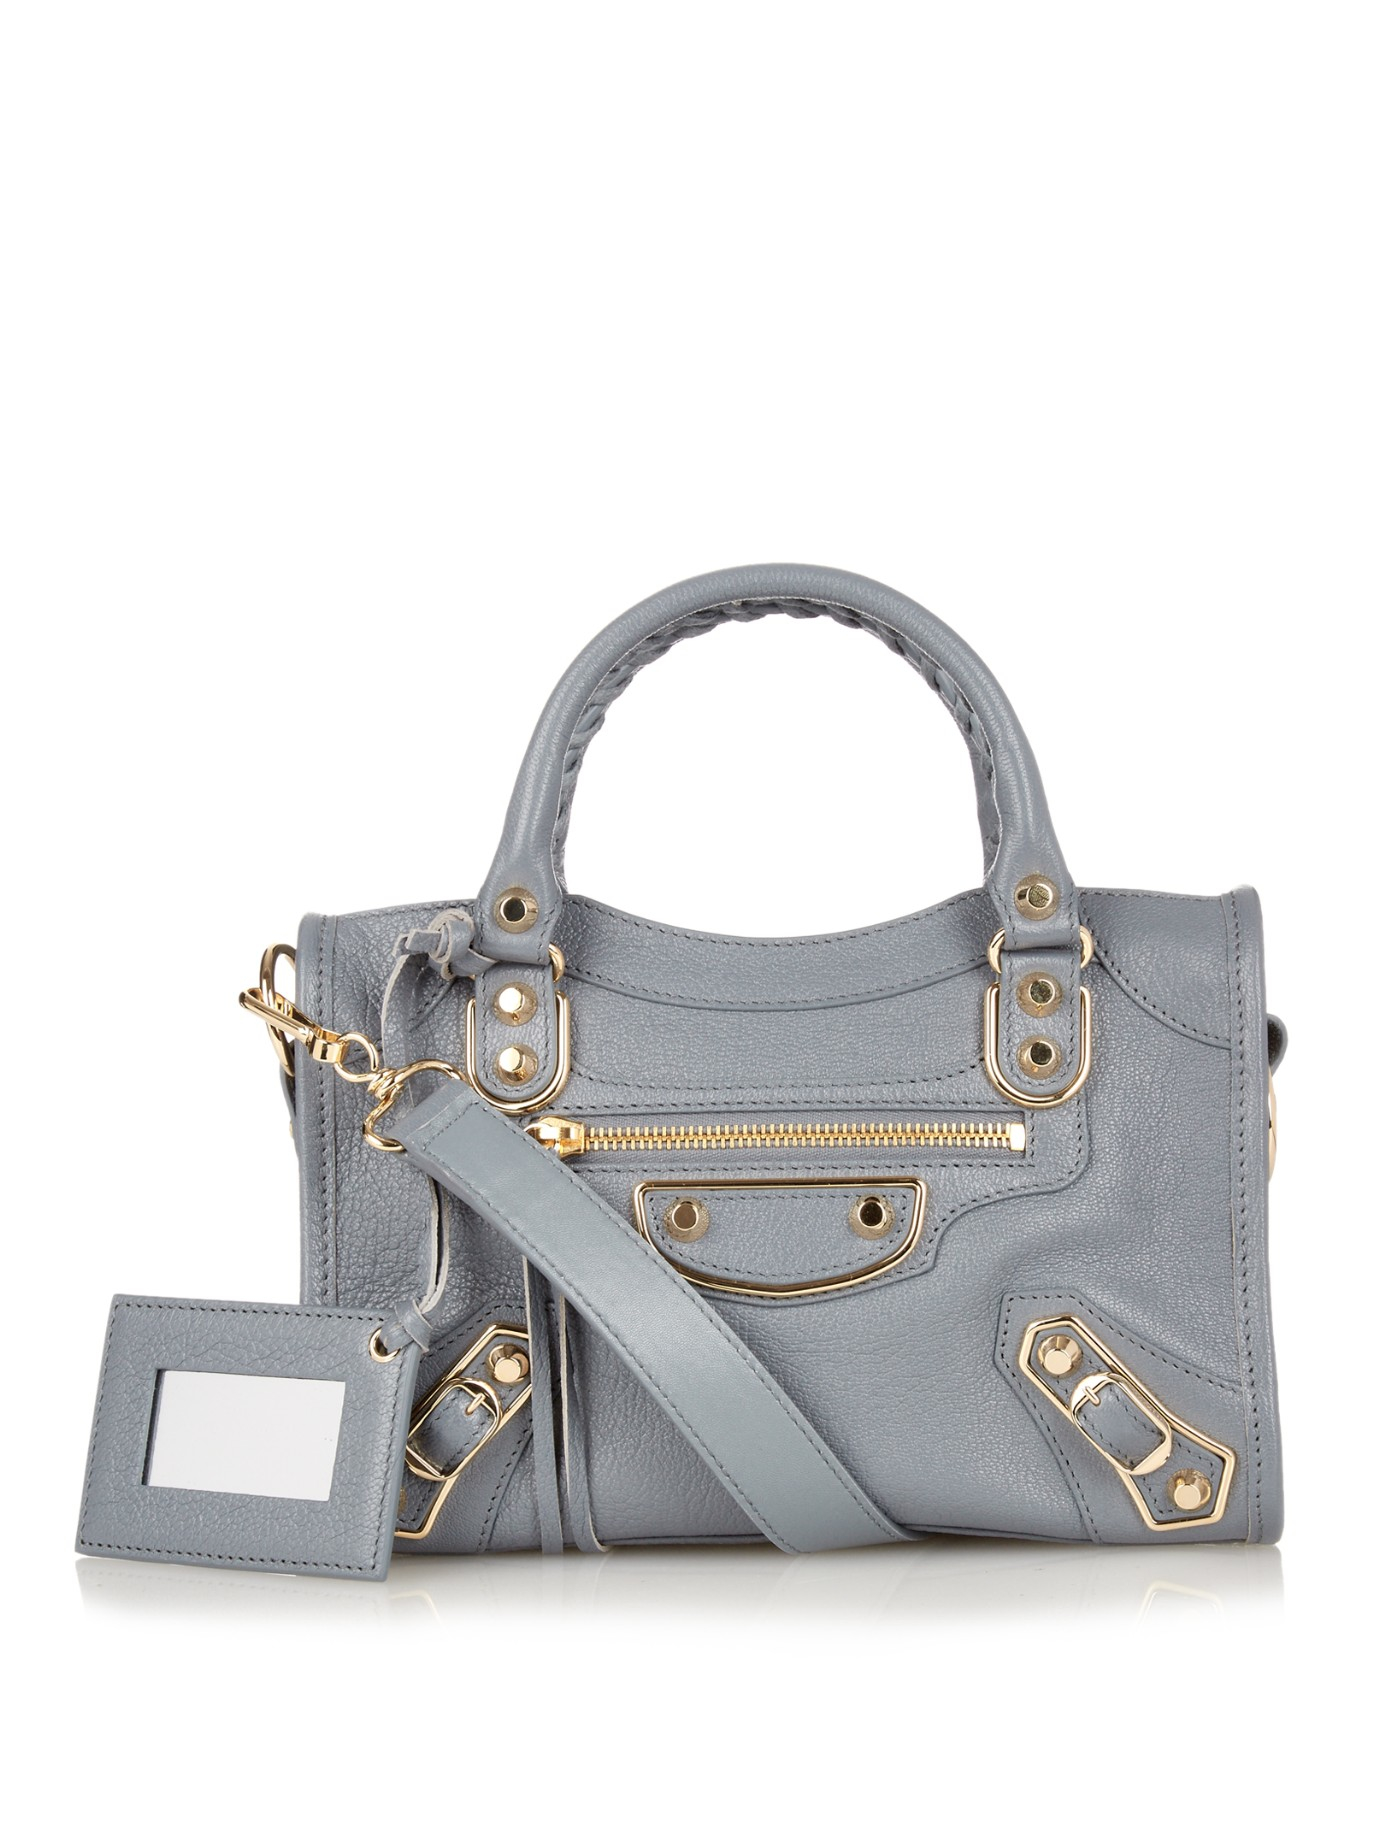 Balenciaga Classic Mini City Metallic-Edge Cross-body Bag in Blue - Lyst